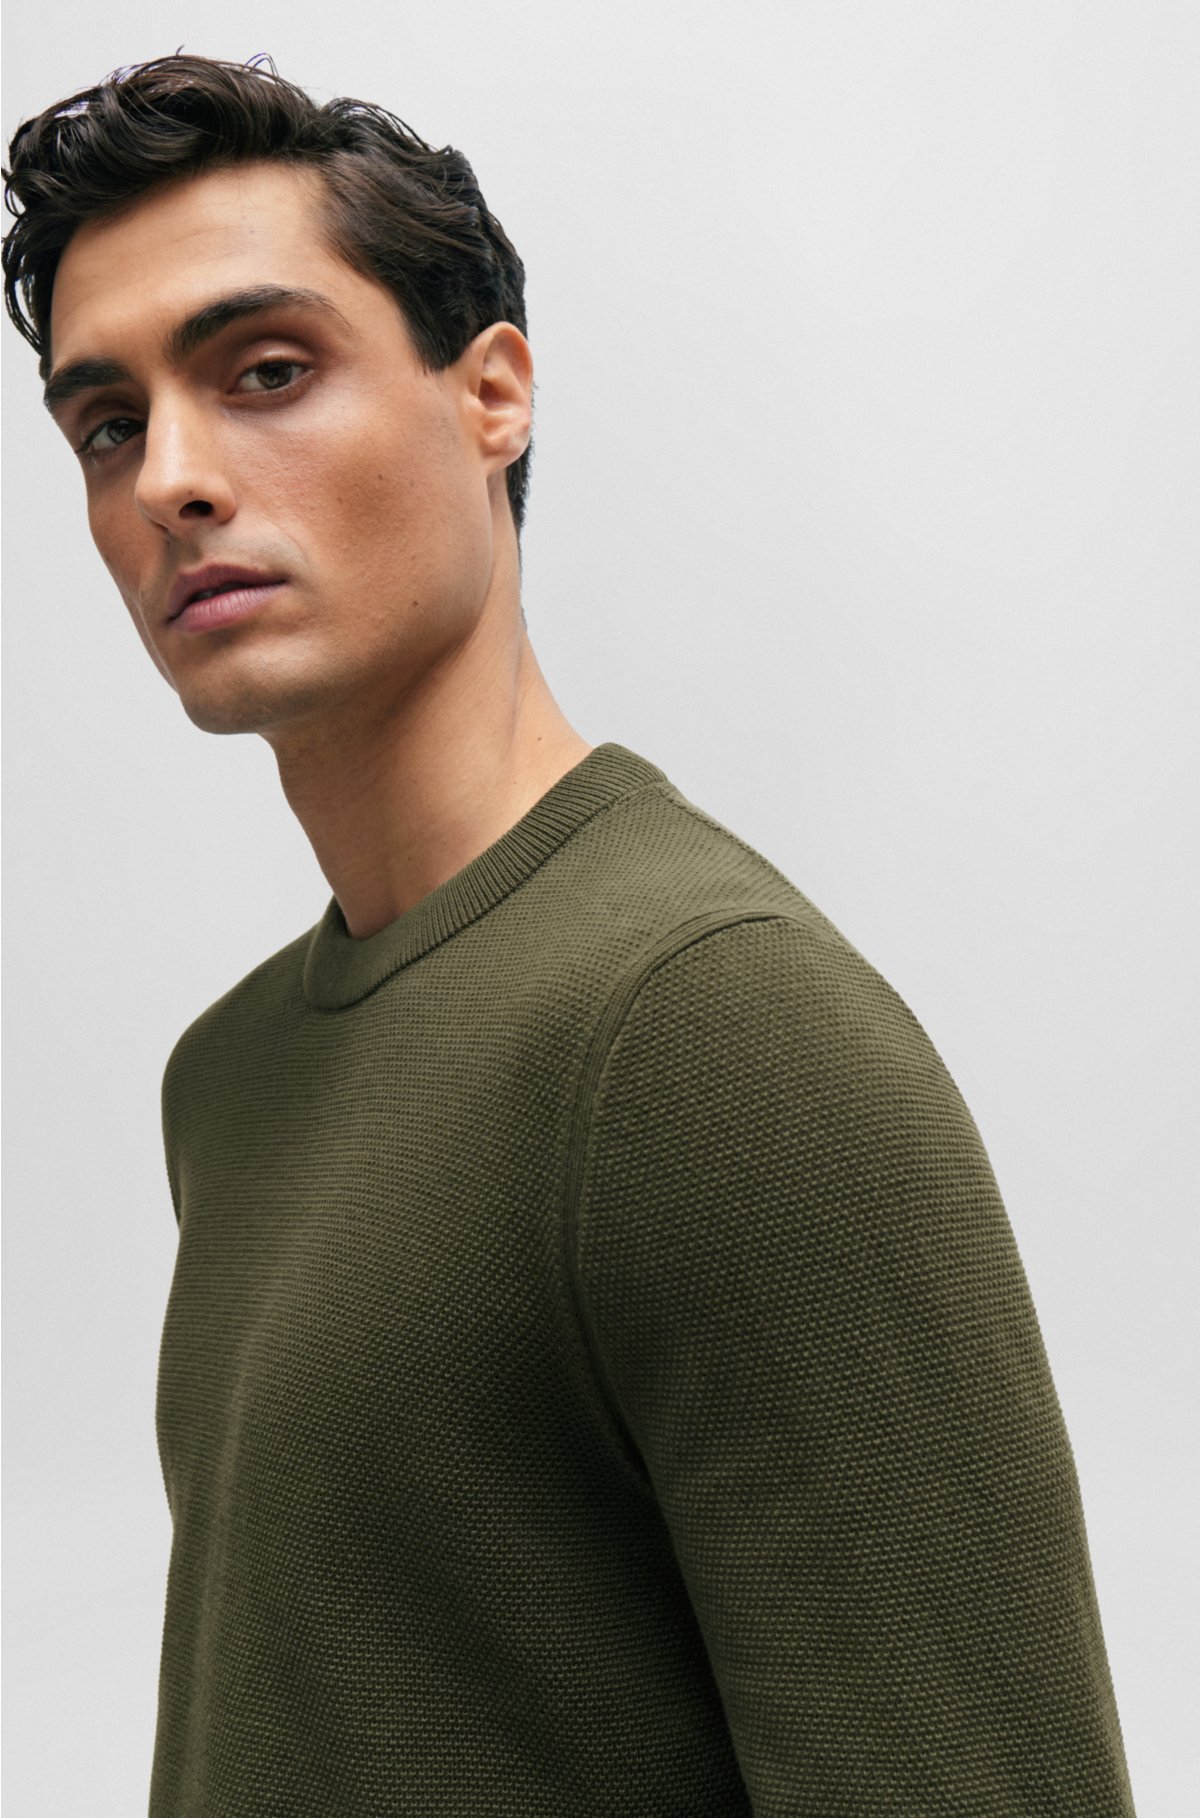 Micro-structured crew-neck sweater in cotton, Dark Green